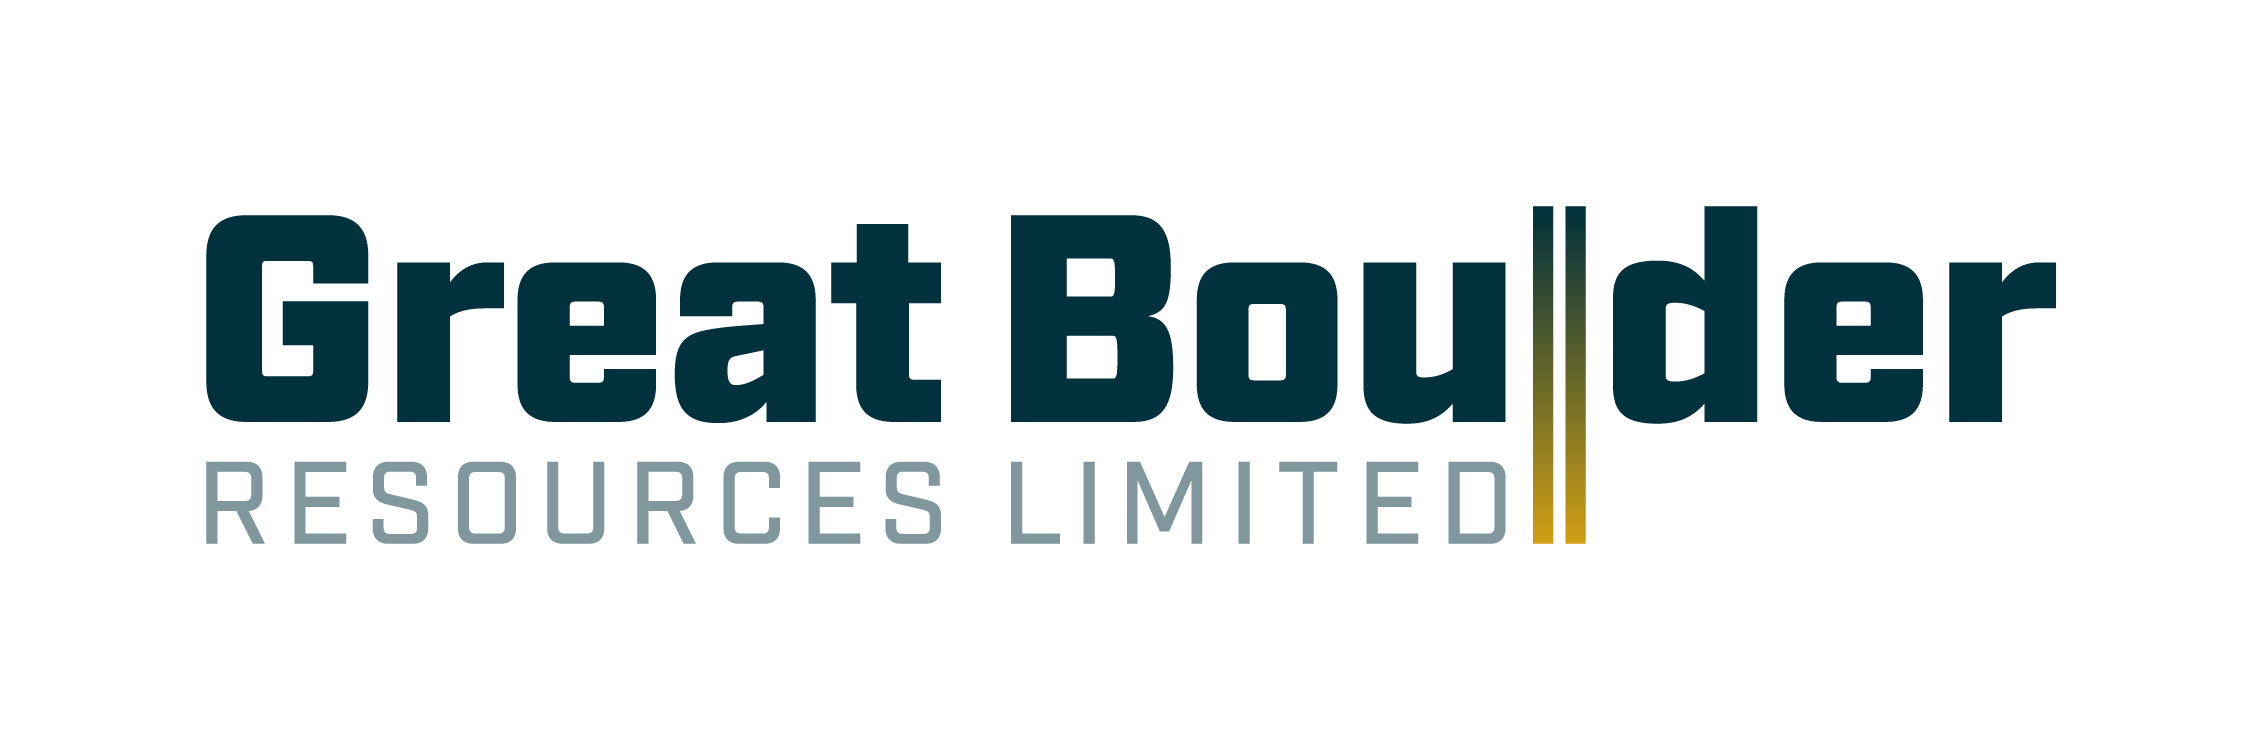 Great Boulder Resources – GBR